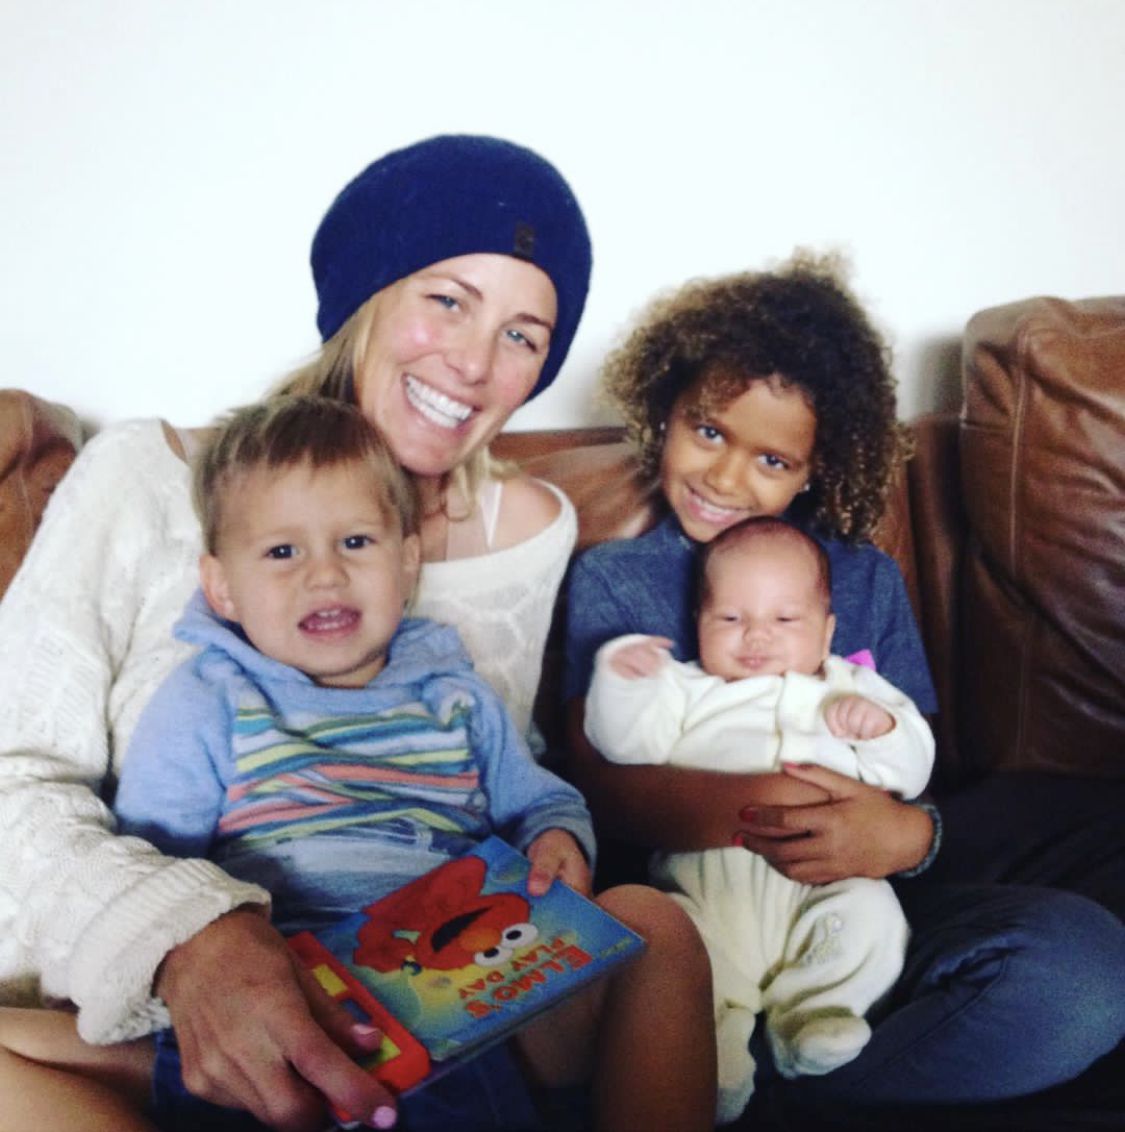 Meet Tom Brady's sister, Julie Brady: net worth, daughter, husband